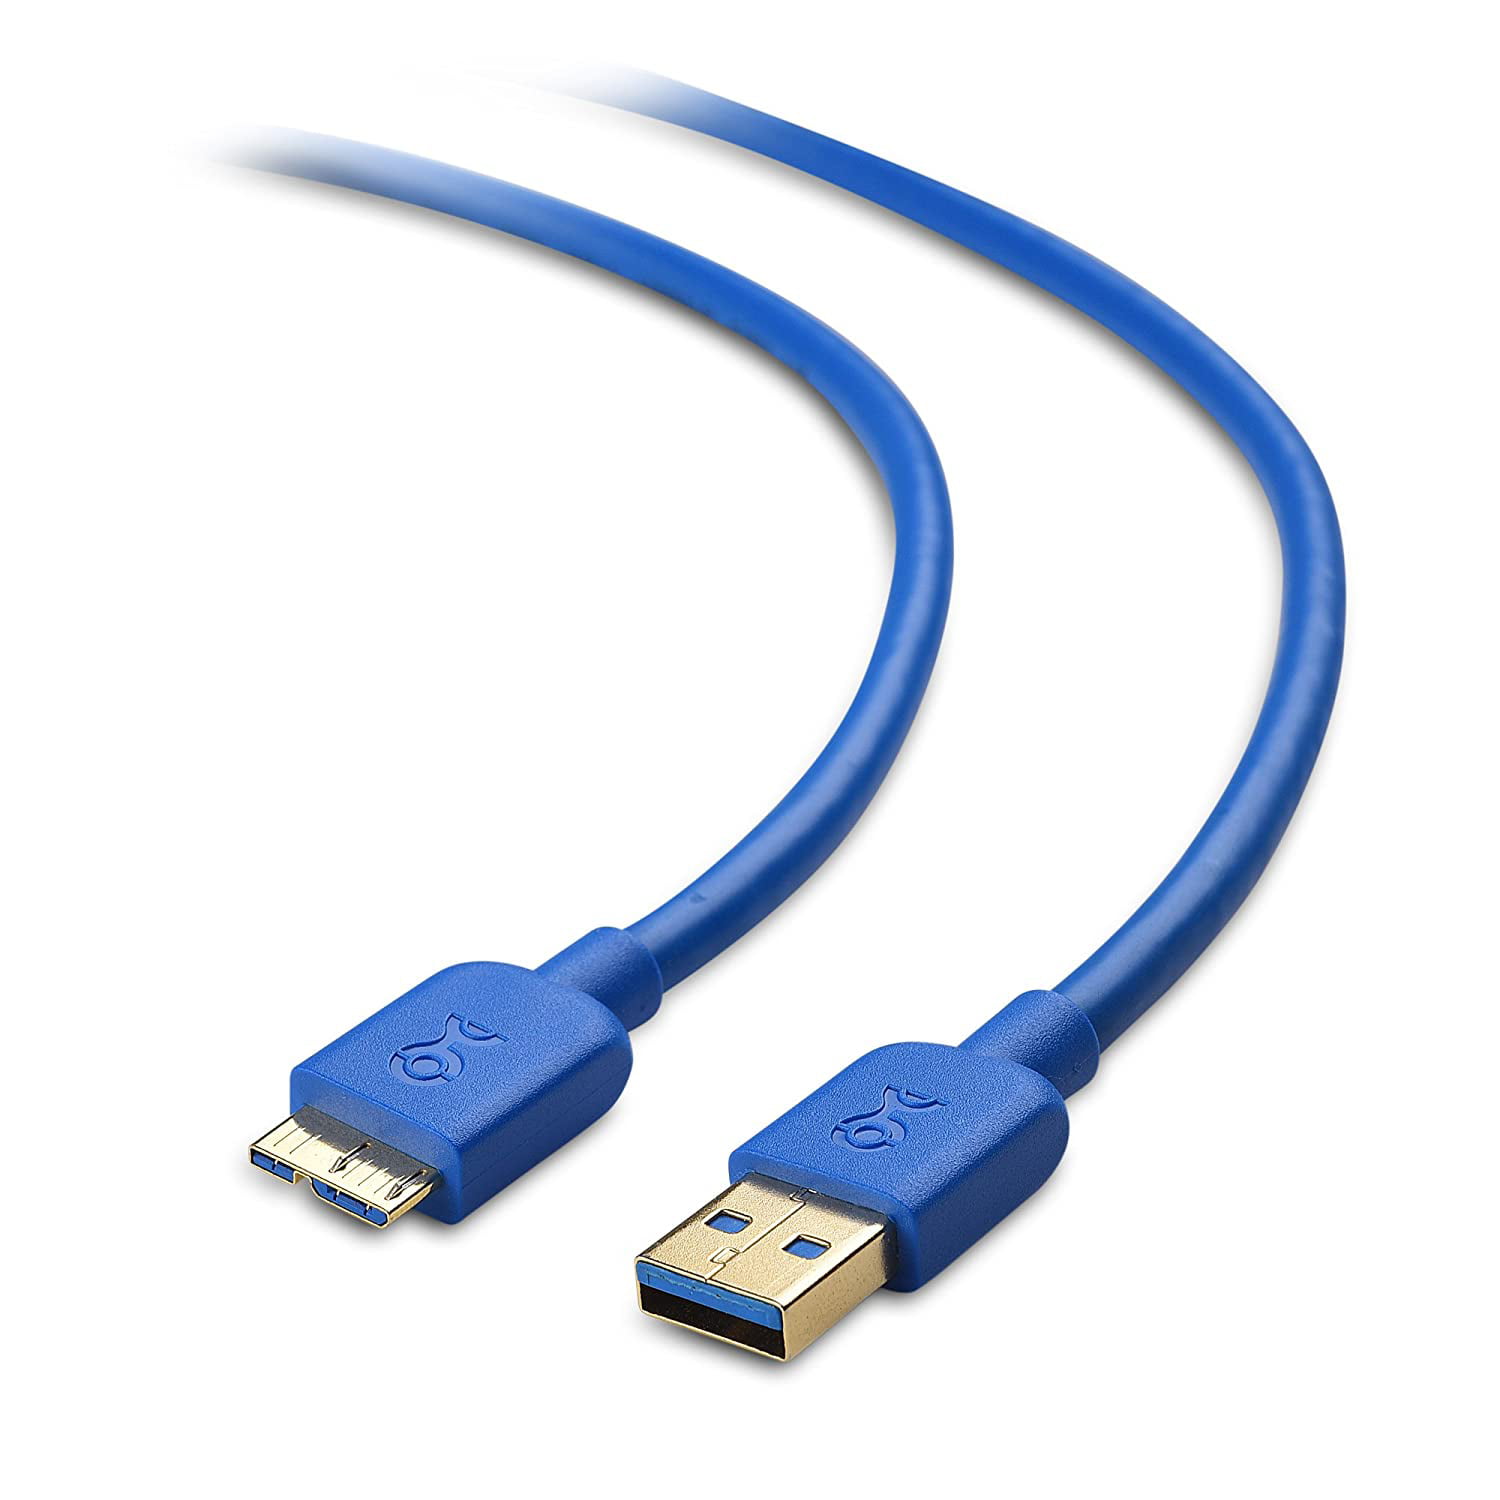 Specialiteit Iedereen Afscheid Cable Matters Micro USB 3.0 Cable (Micro USB 3 Cable A to Micro B) in Blue 3  Feet - Available 3 Feet - 15 Feet in Length - Walmart.com